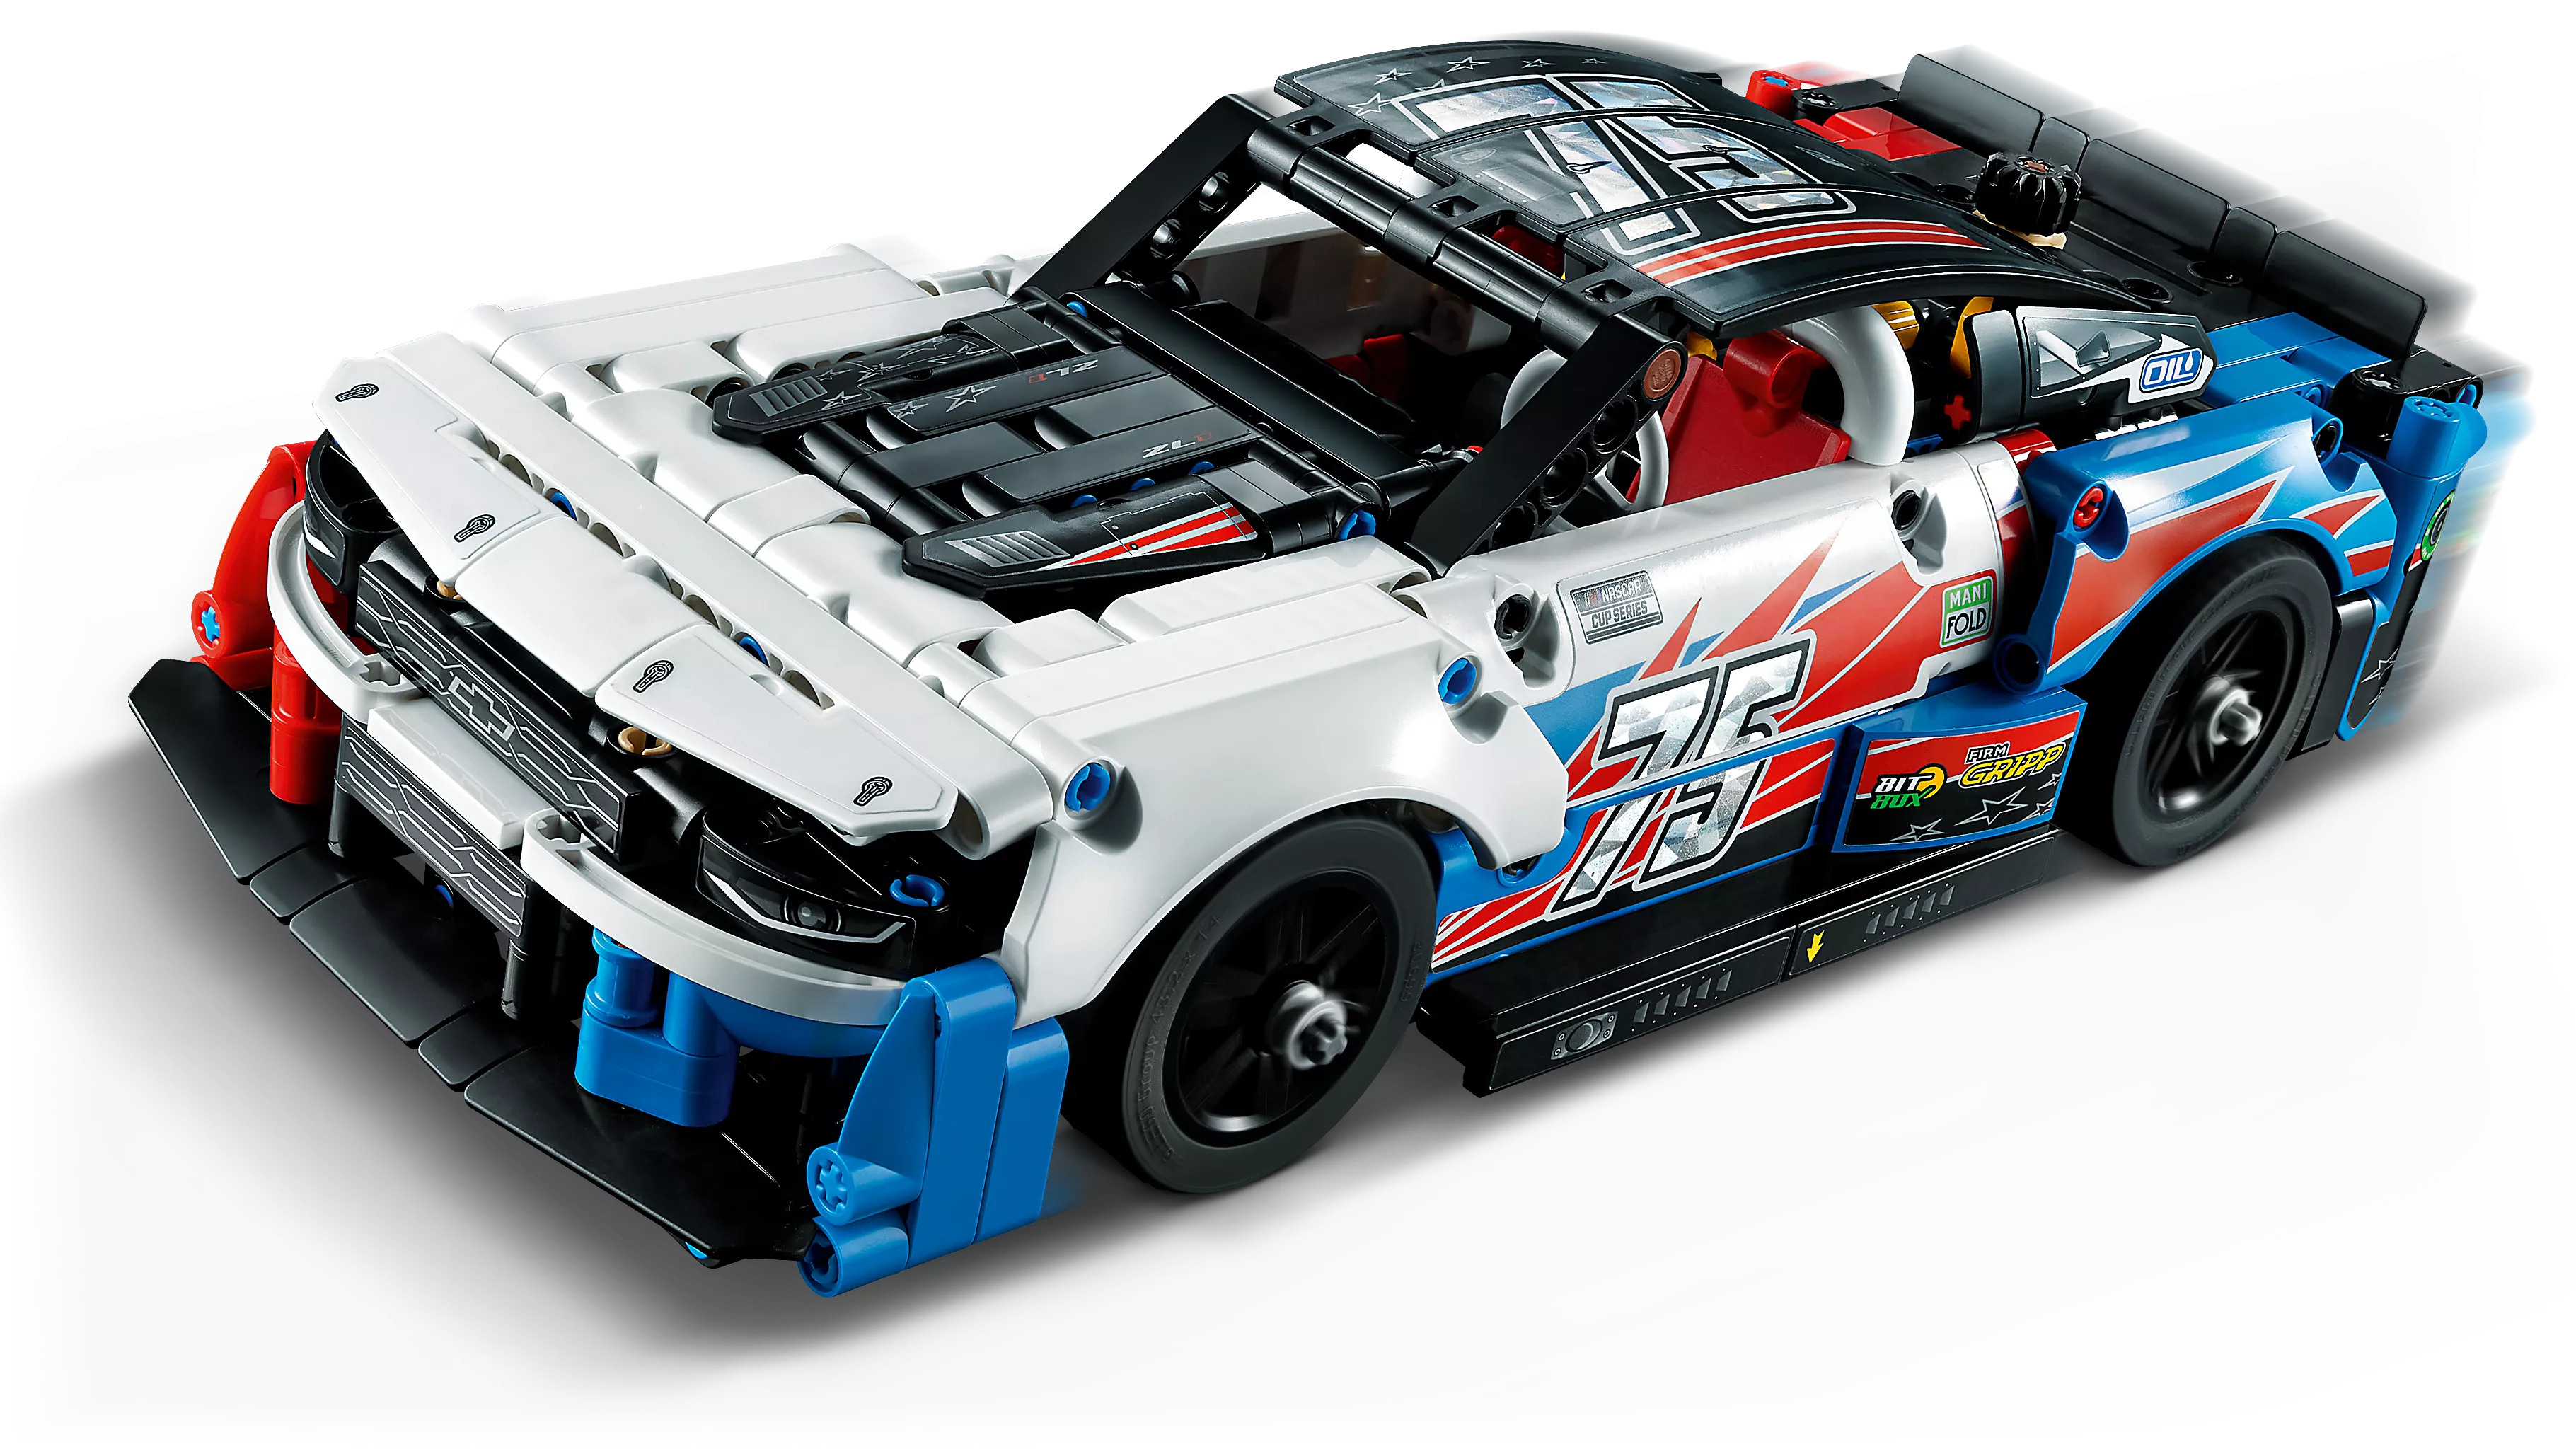 LEGO 42153 NASCAR® Next Gen Chevrolet Camaro ZL1